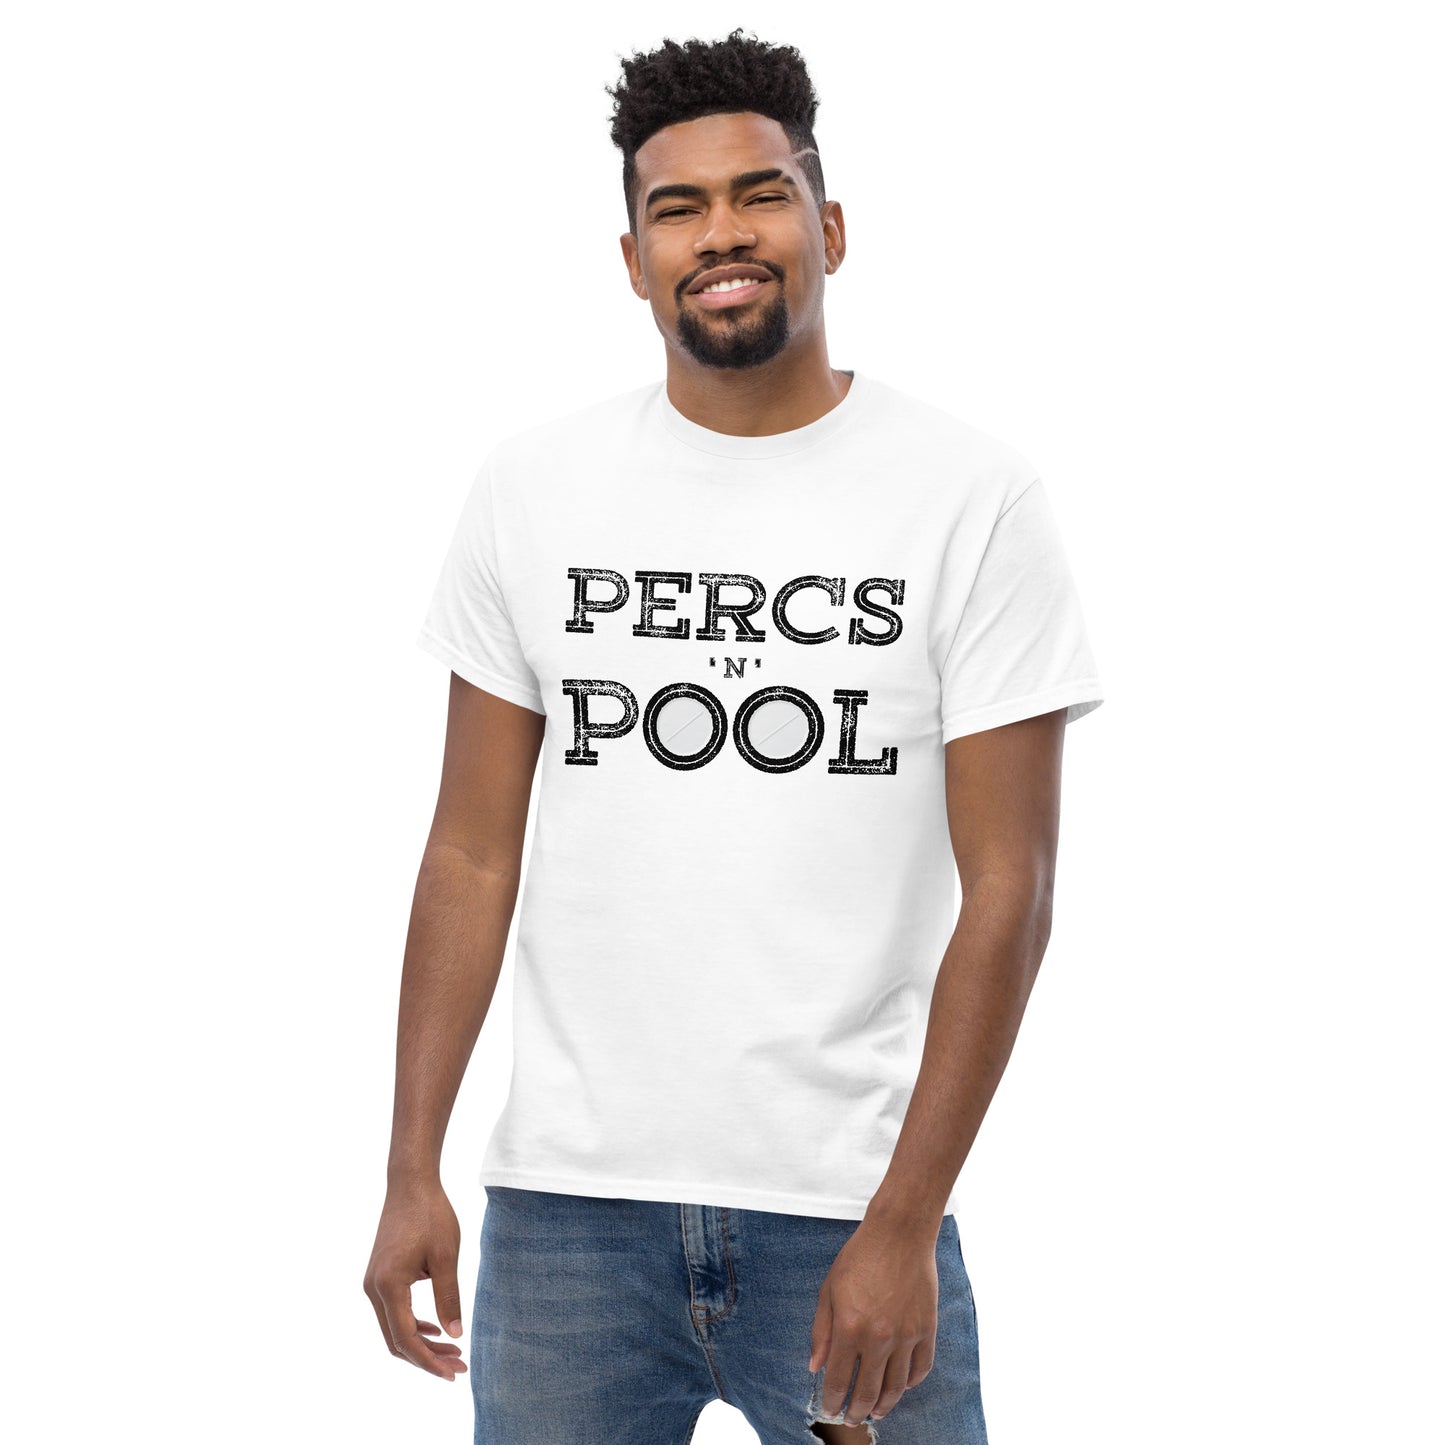 Percs N Pool - Men's Tee